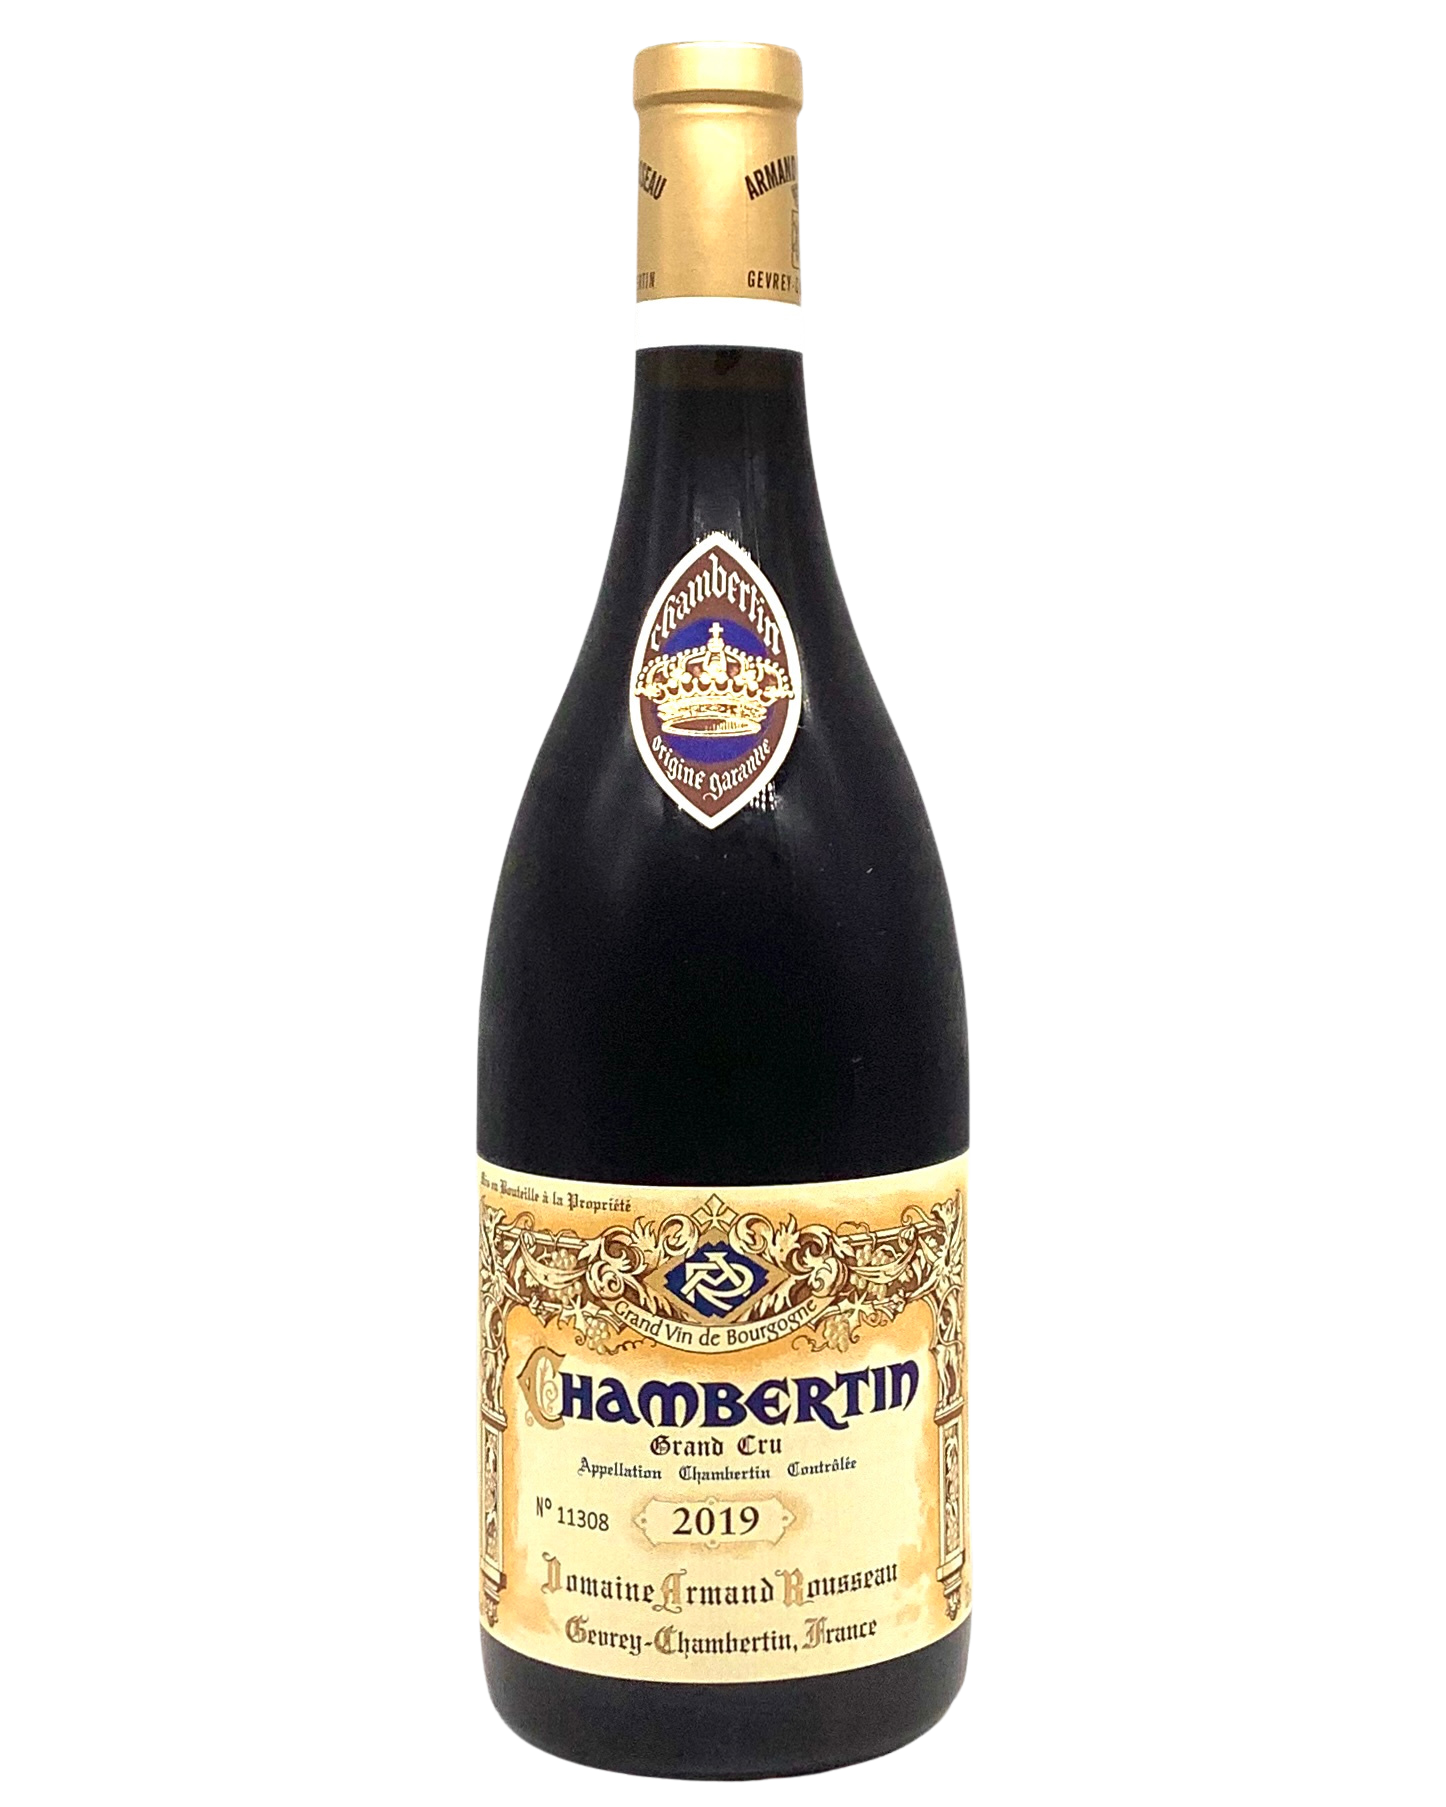 Domaine Armand Rousseau, Pinot Noir, Chambertin Grand Cru, Gevrey-Chambertin, Côte de Nuits, Burgundy, France 2019